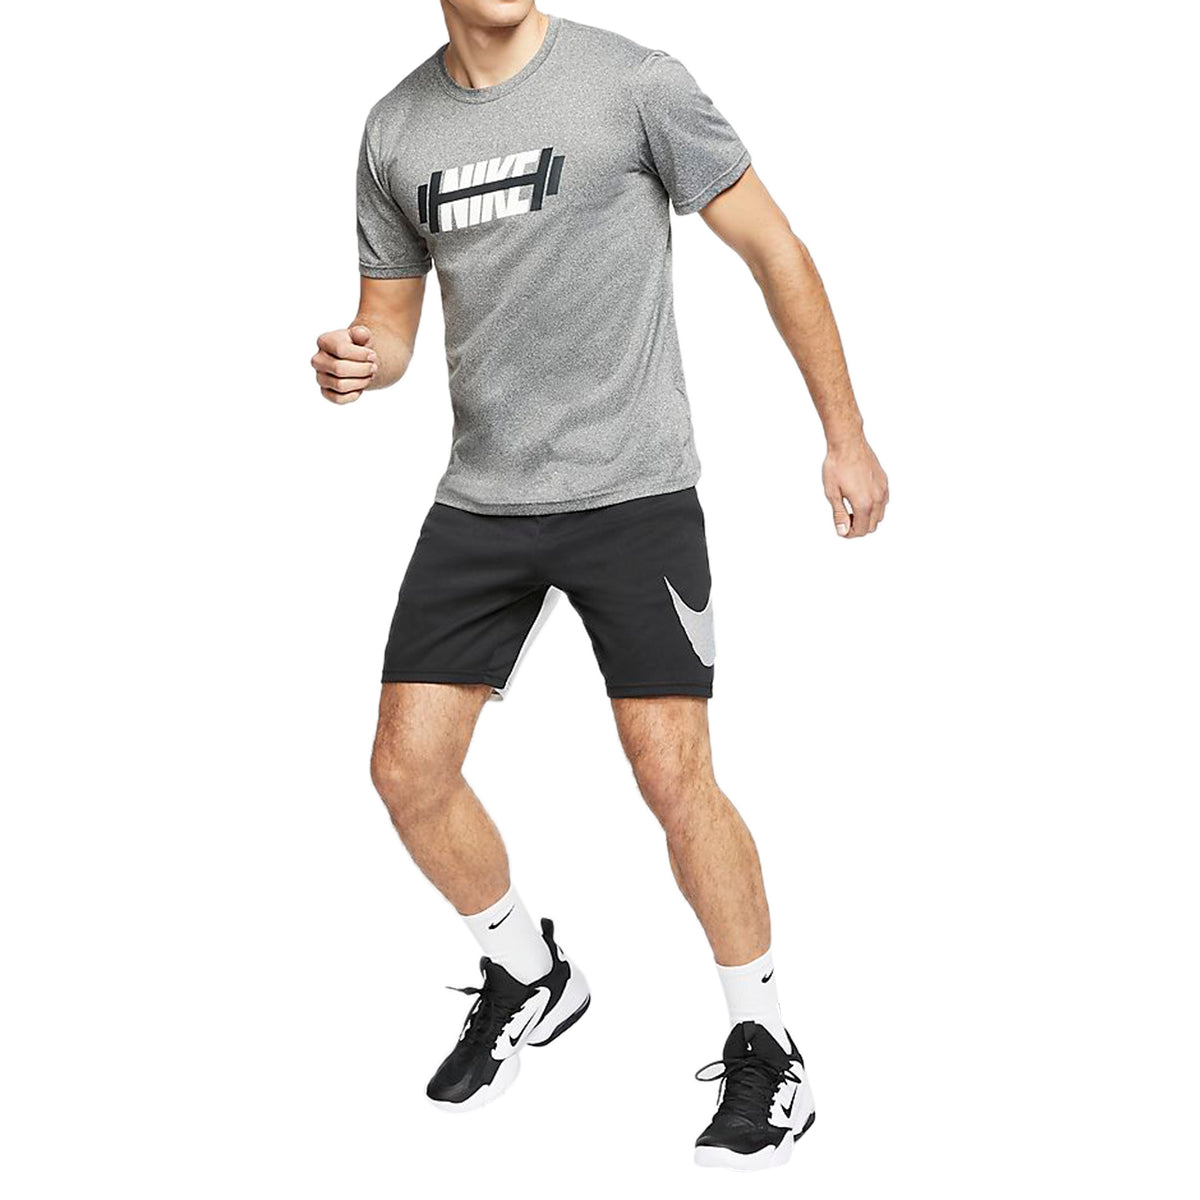 Nike Dri-fit Legend T-shirt Mens Style : Ct6470